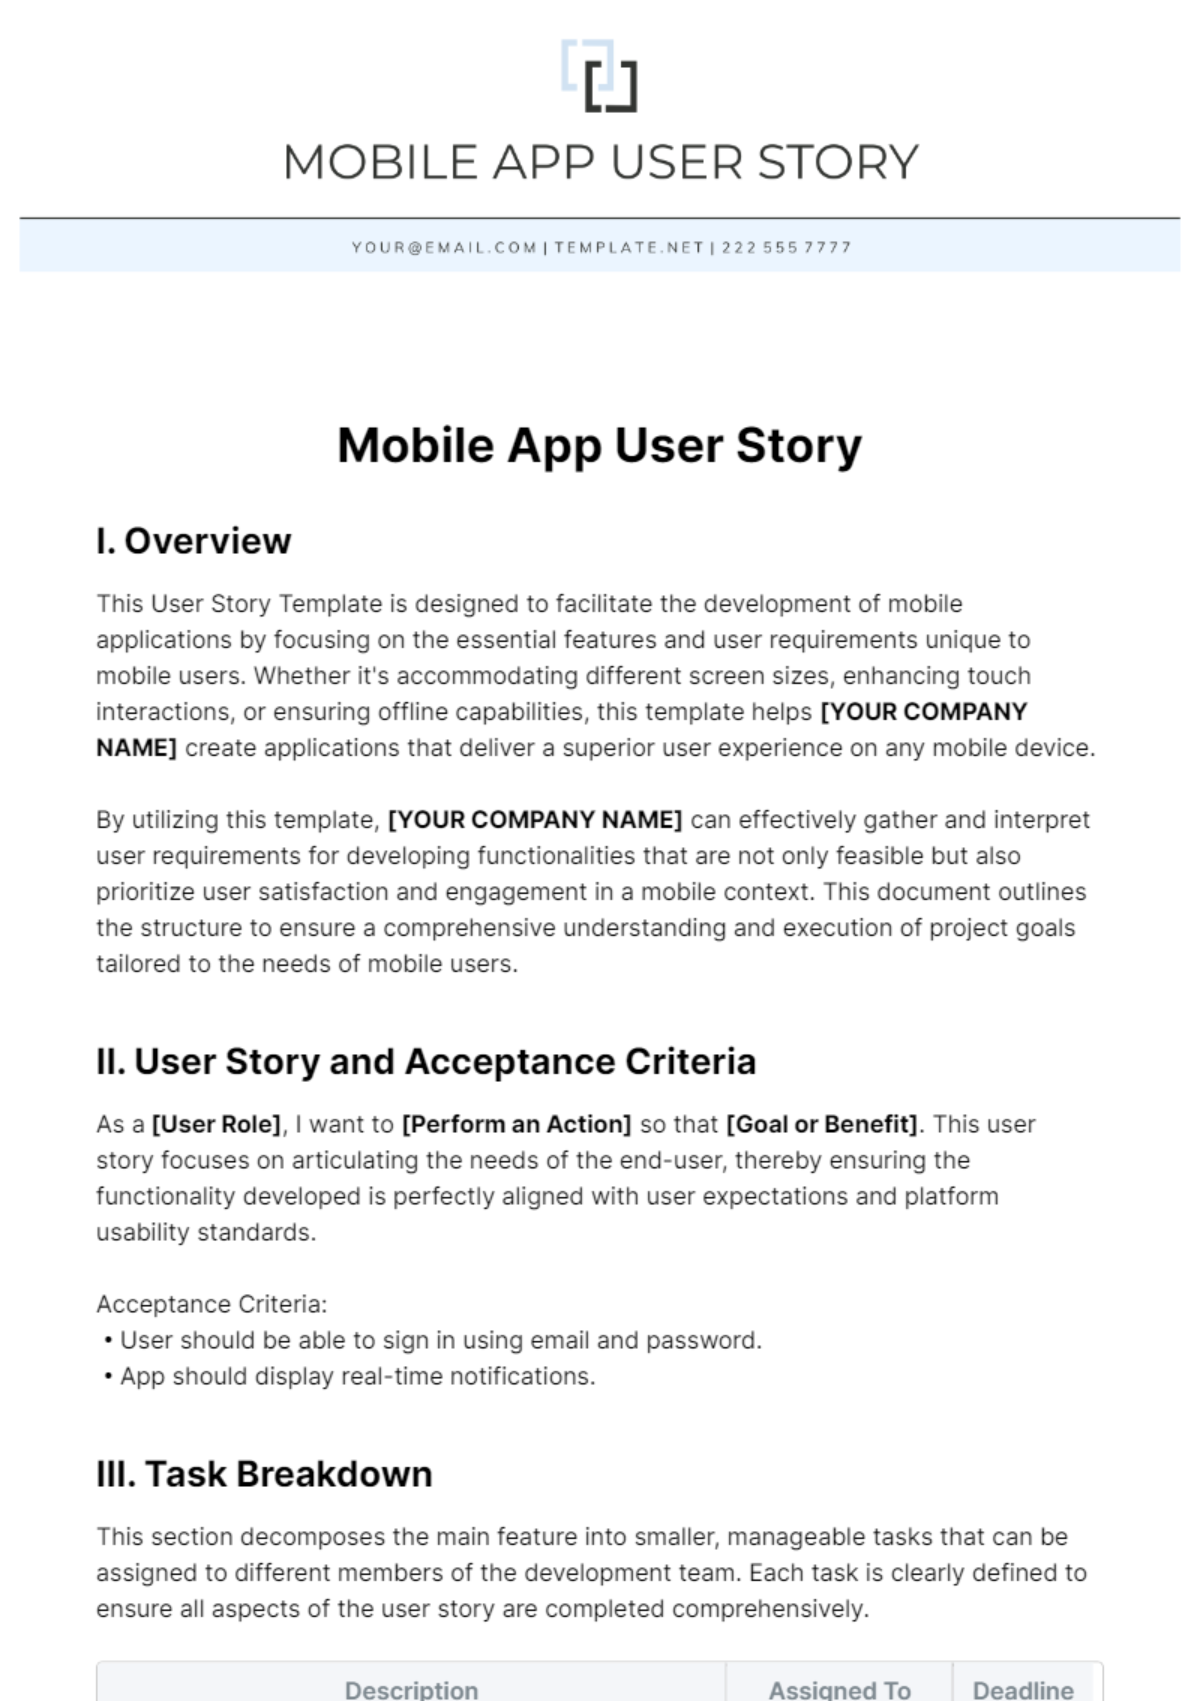 Mobile App User Story Template